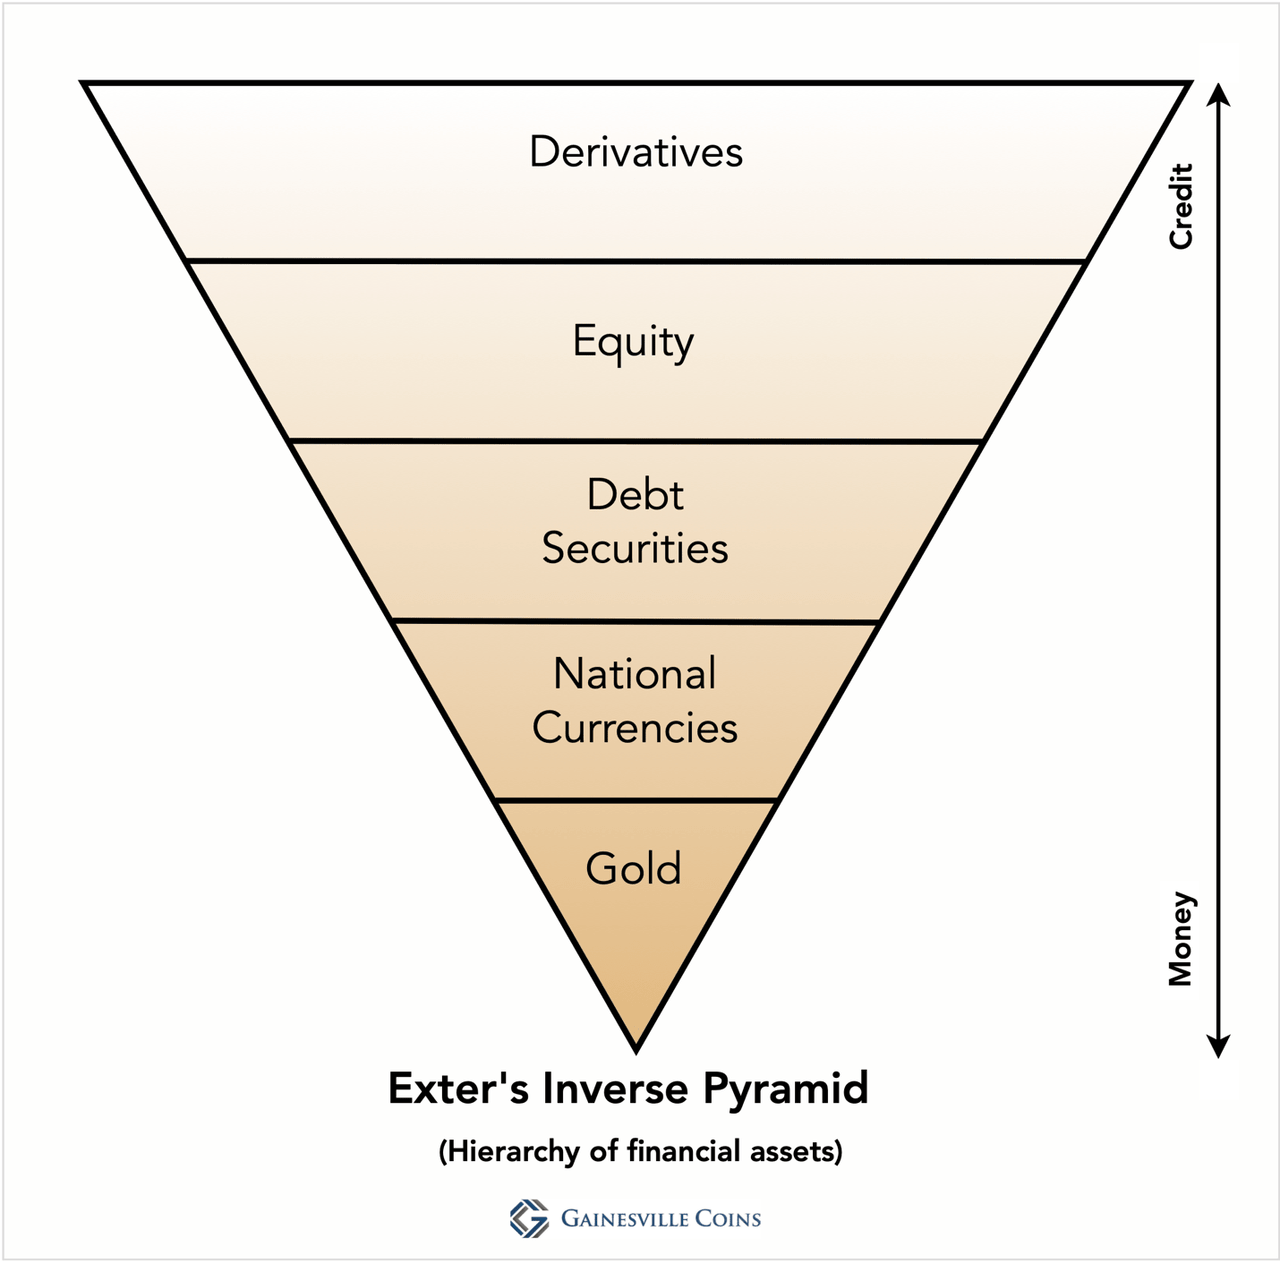 Exter’s inverse pyramid